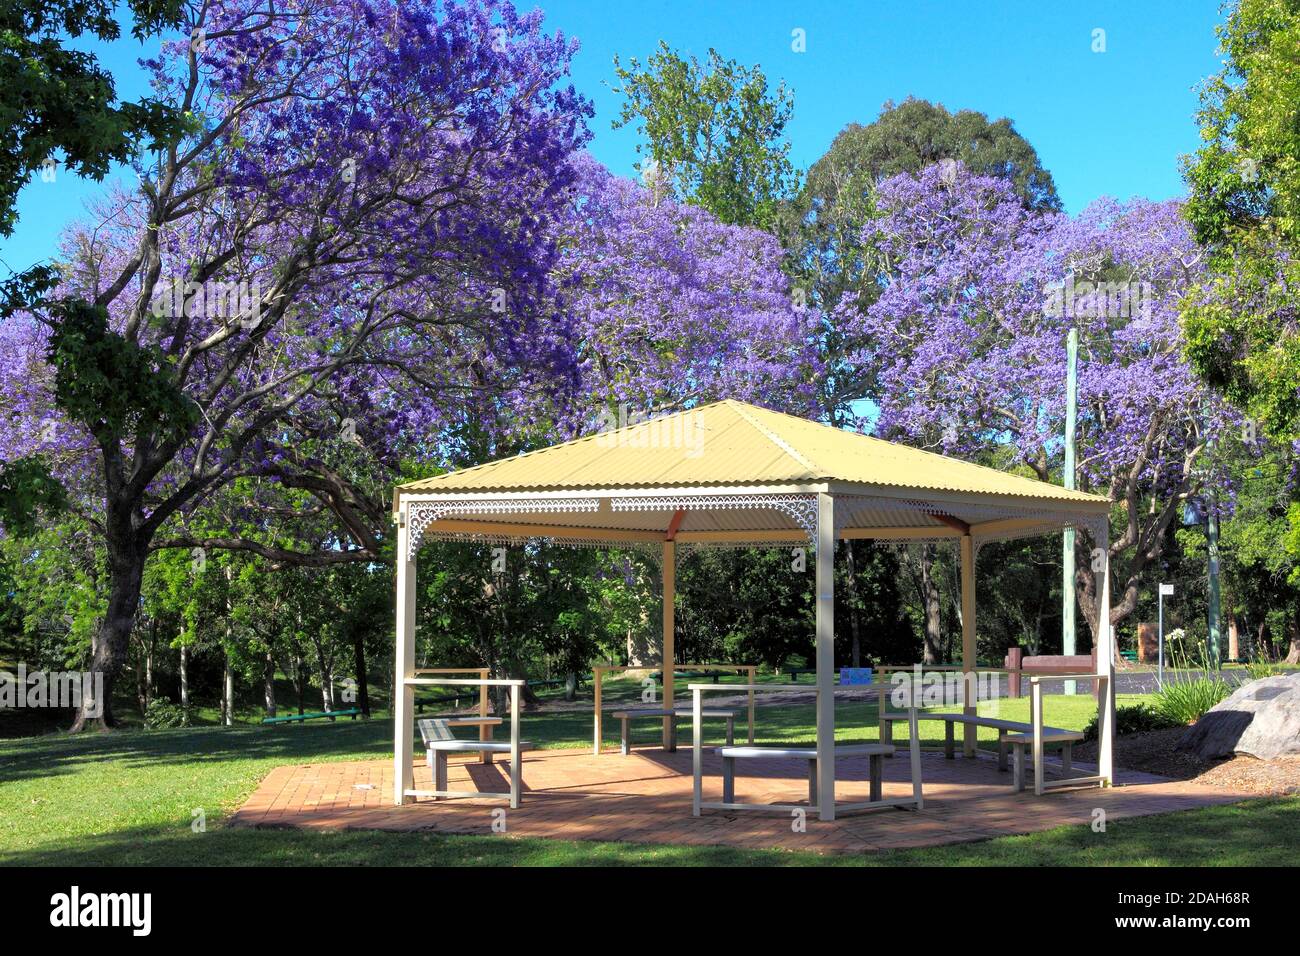 Gazebo in See Park, Grafton, NSW, Australia. Surrounded by jacaranda trees with purple flowers. Stock Photo